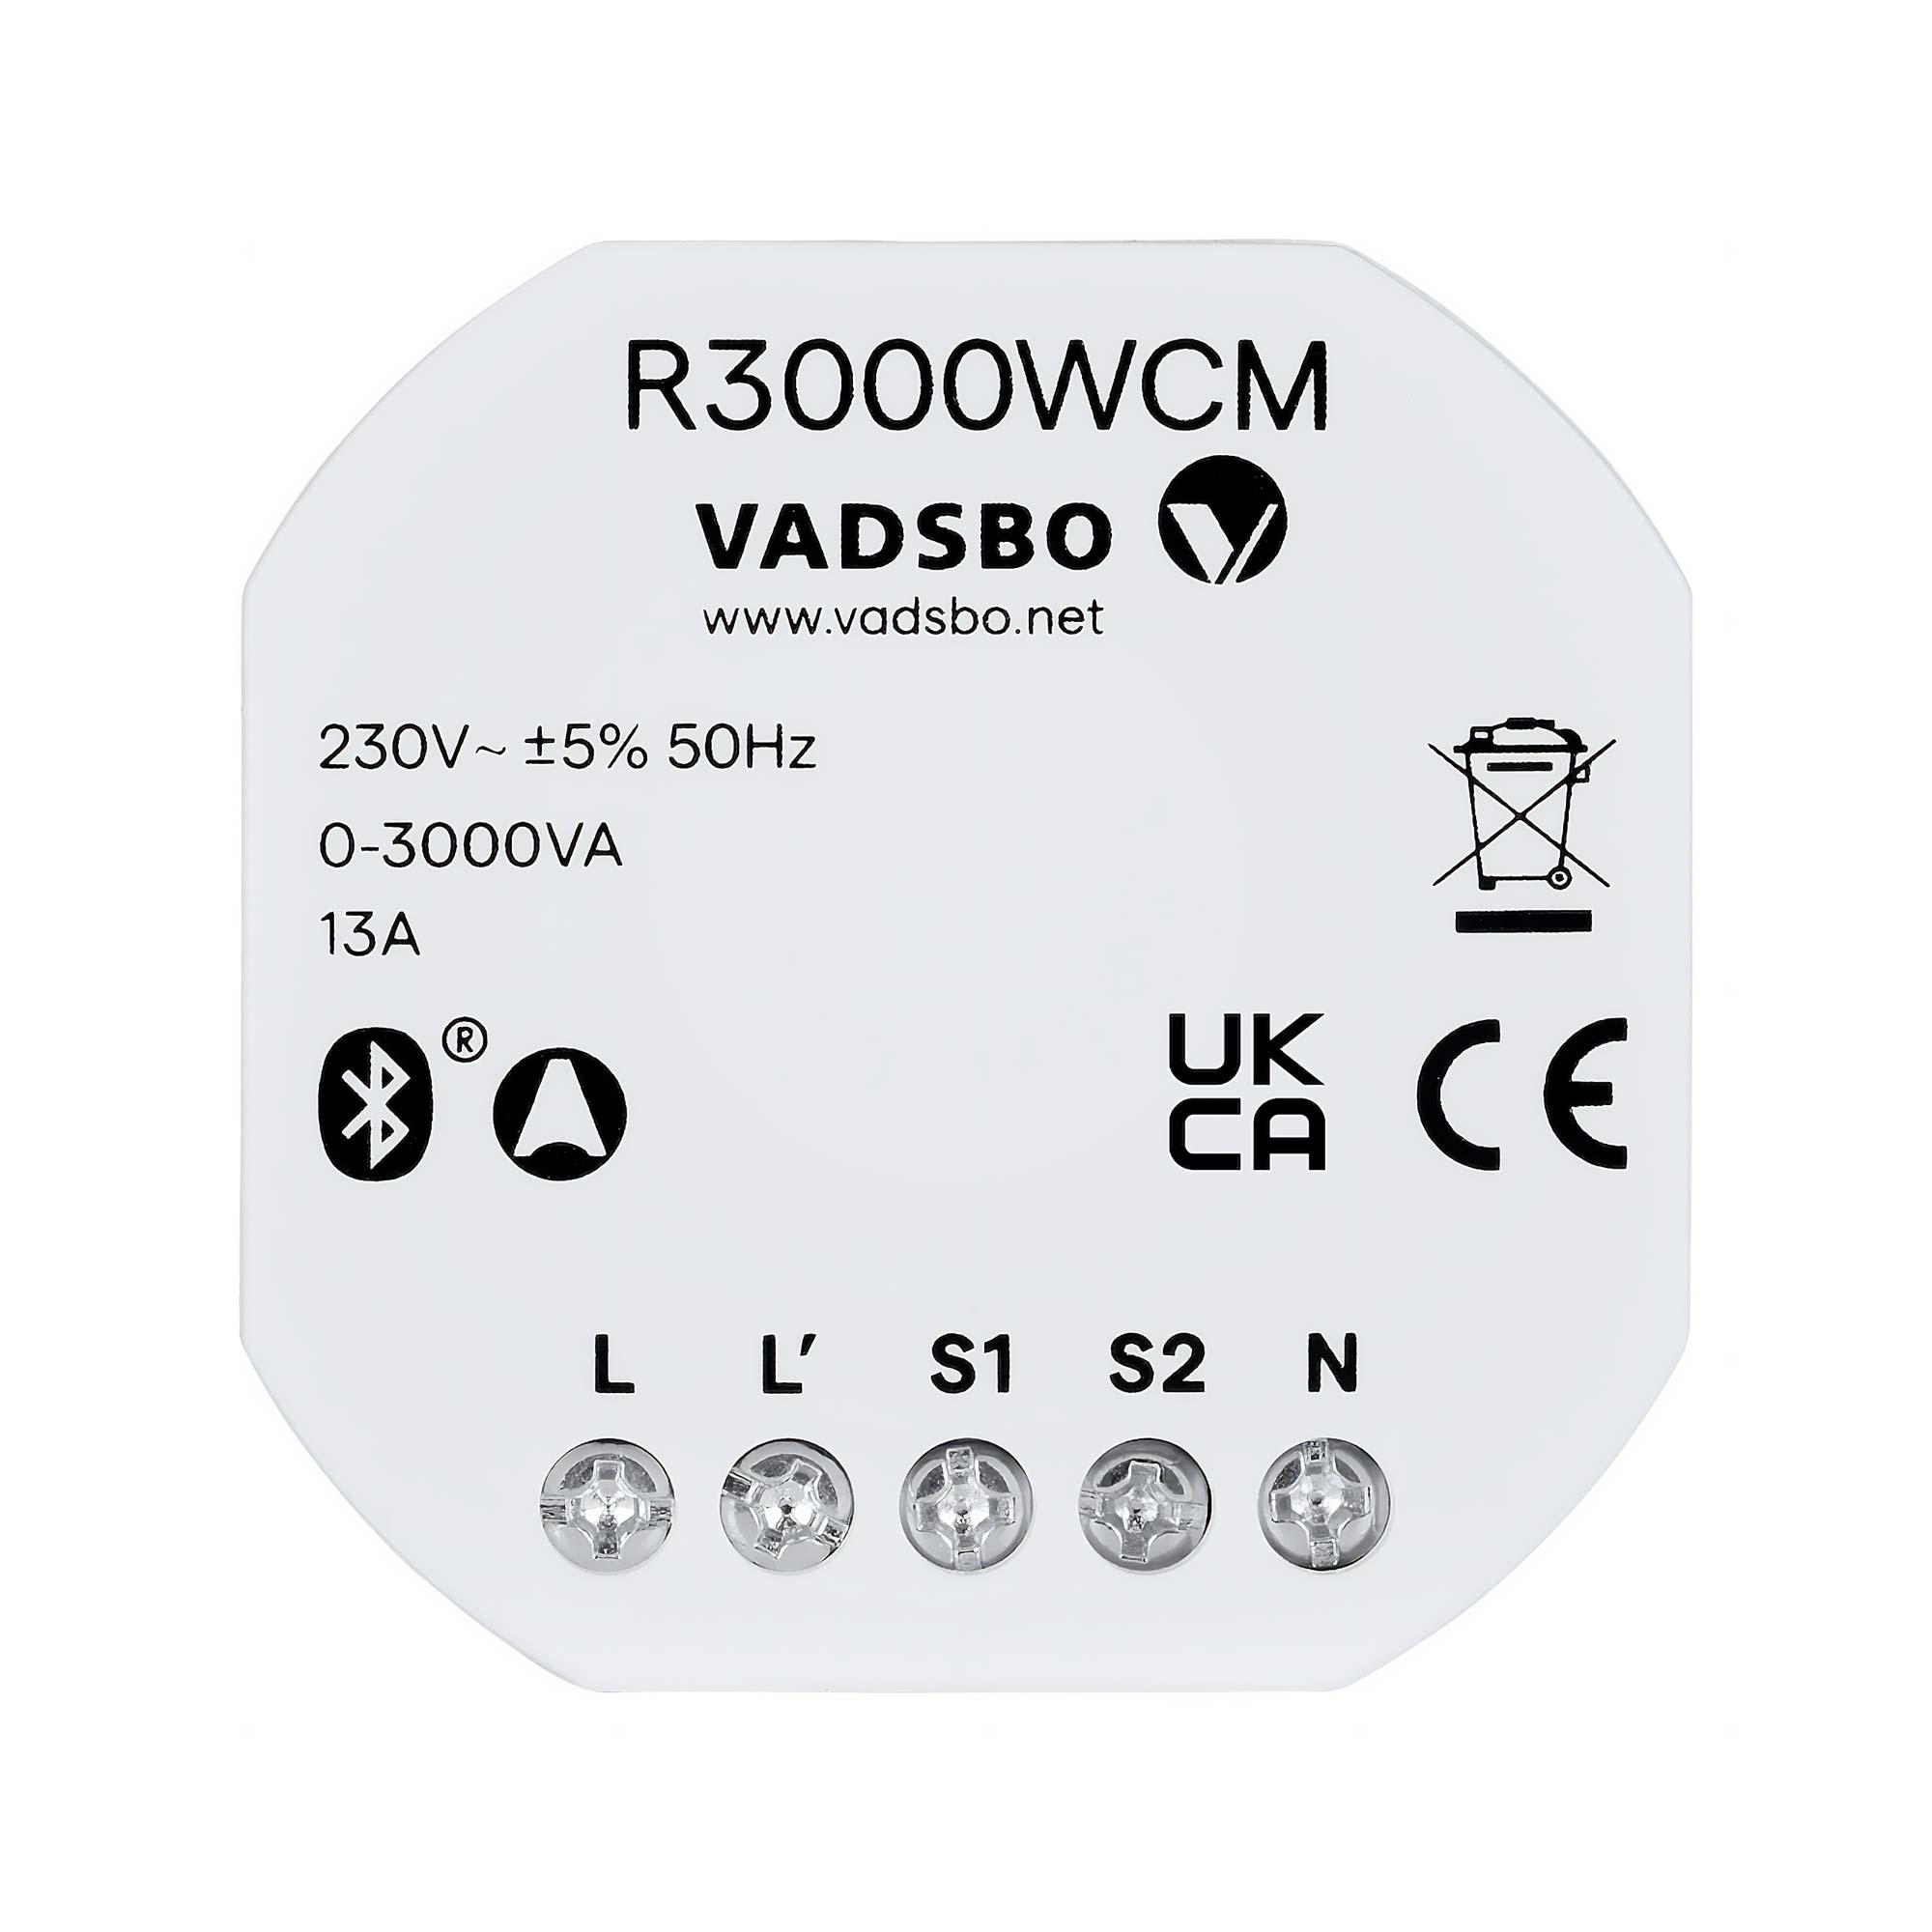 vadsbo-r3000wcm-casambi-relais-2-taster-modul-lichtraum24-01